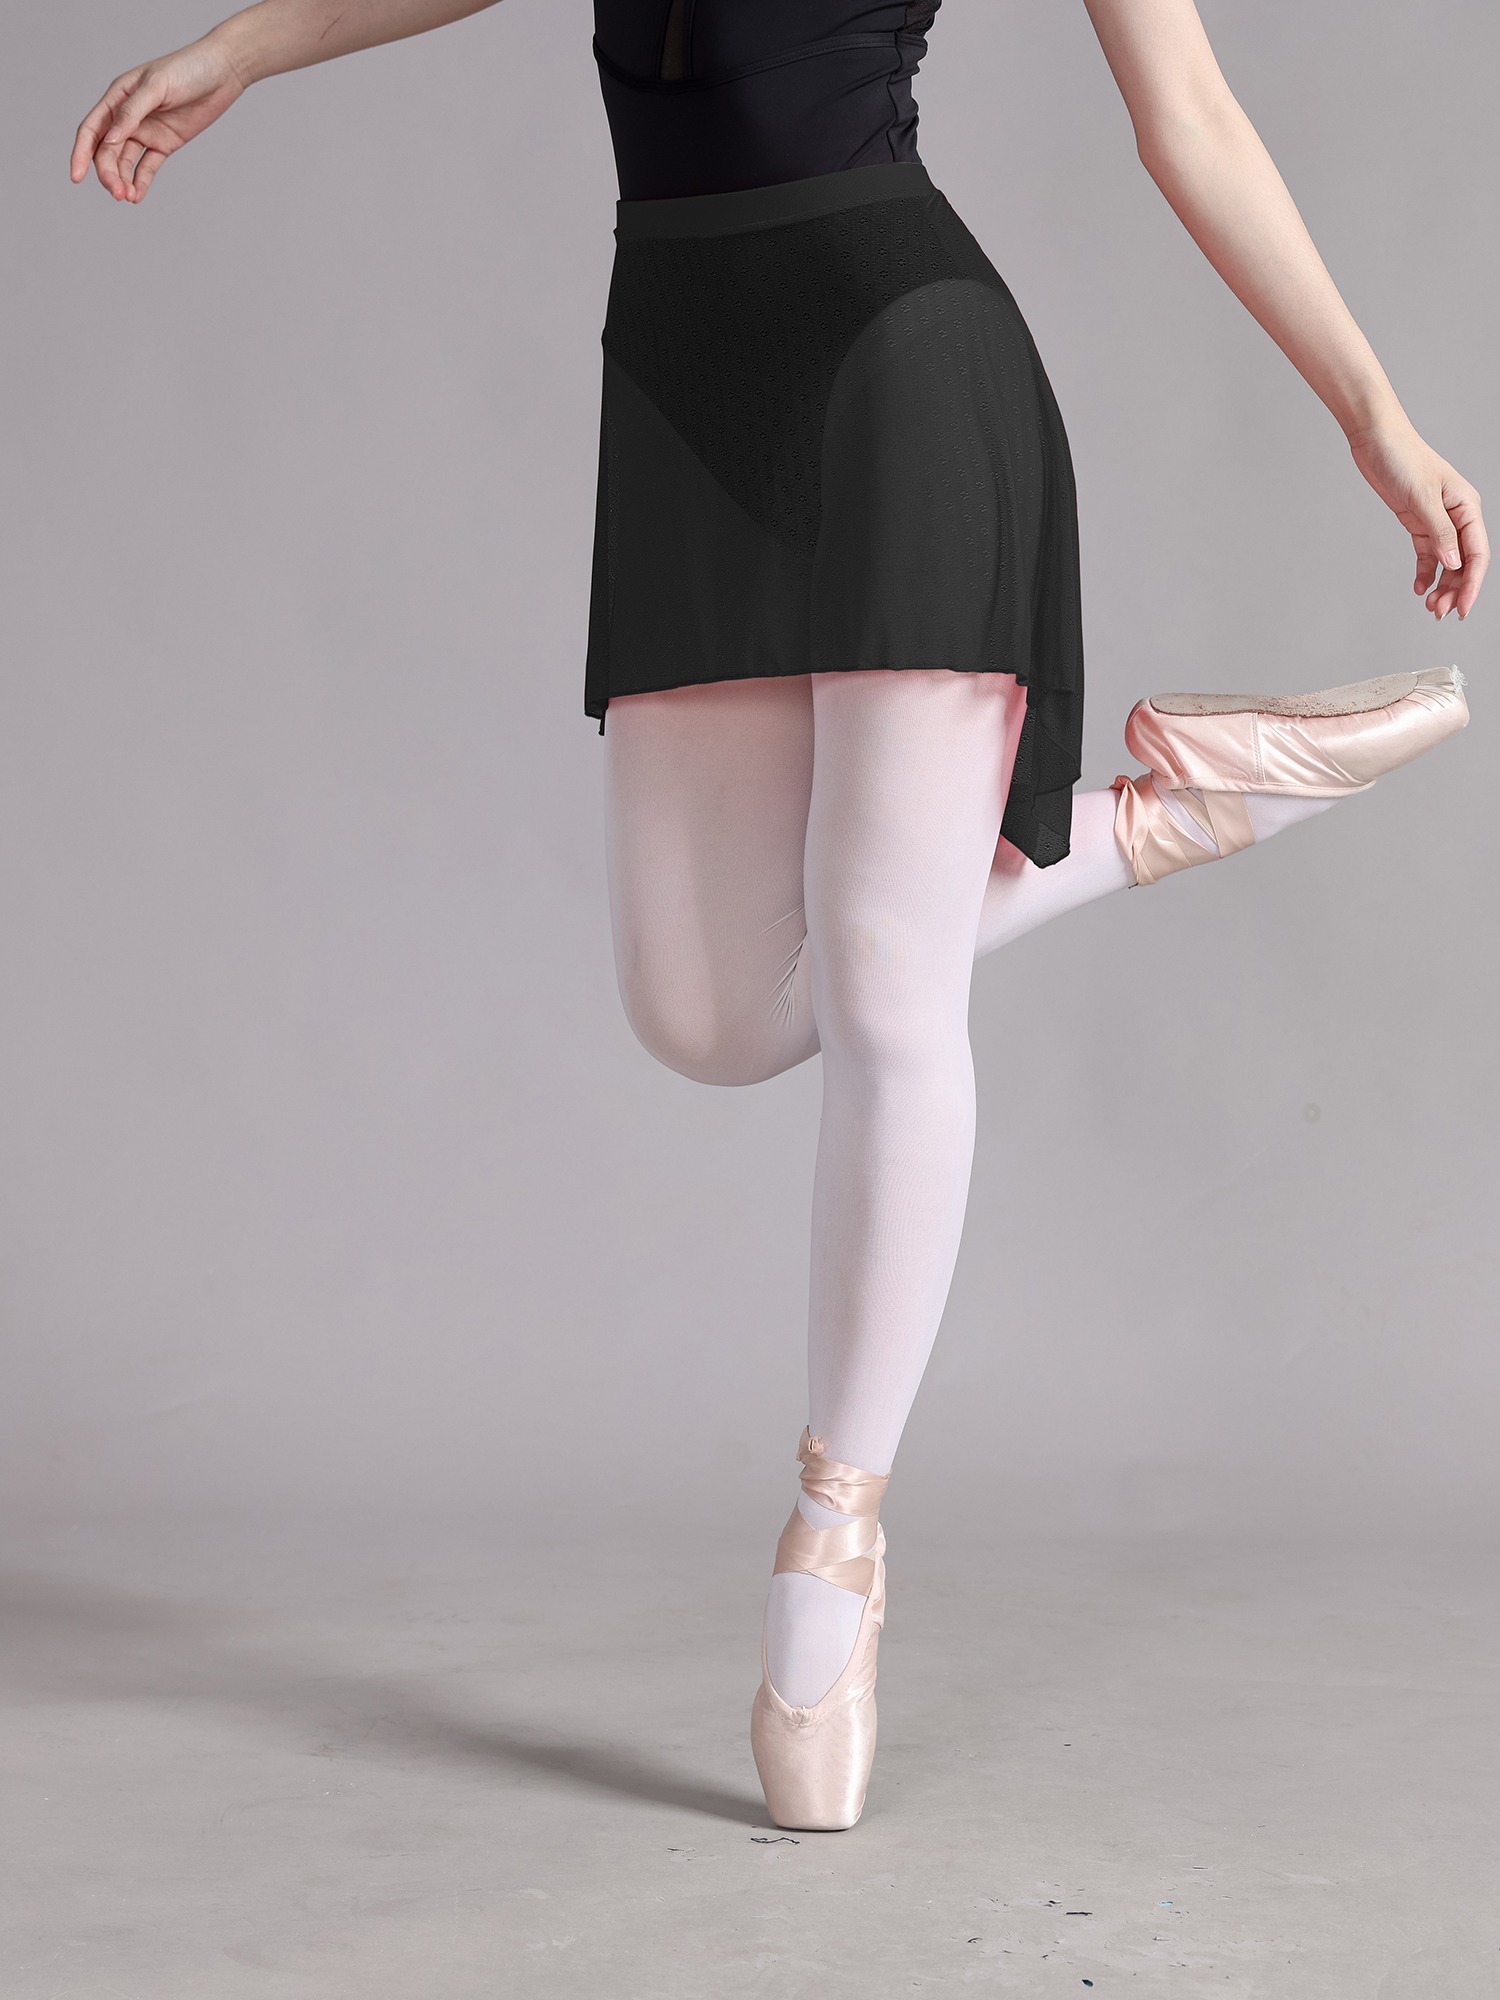 Falda de Ballet para mujer, Falda de baile de malla suave Irregular doblada  lateral, Falda corta translúcida para bailar